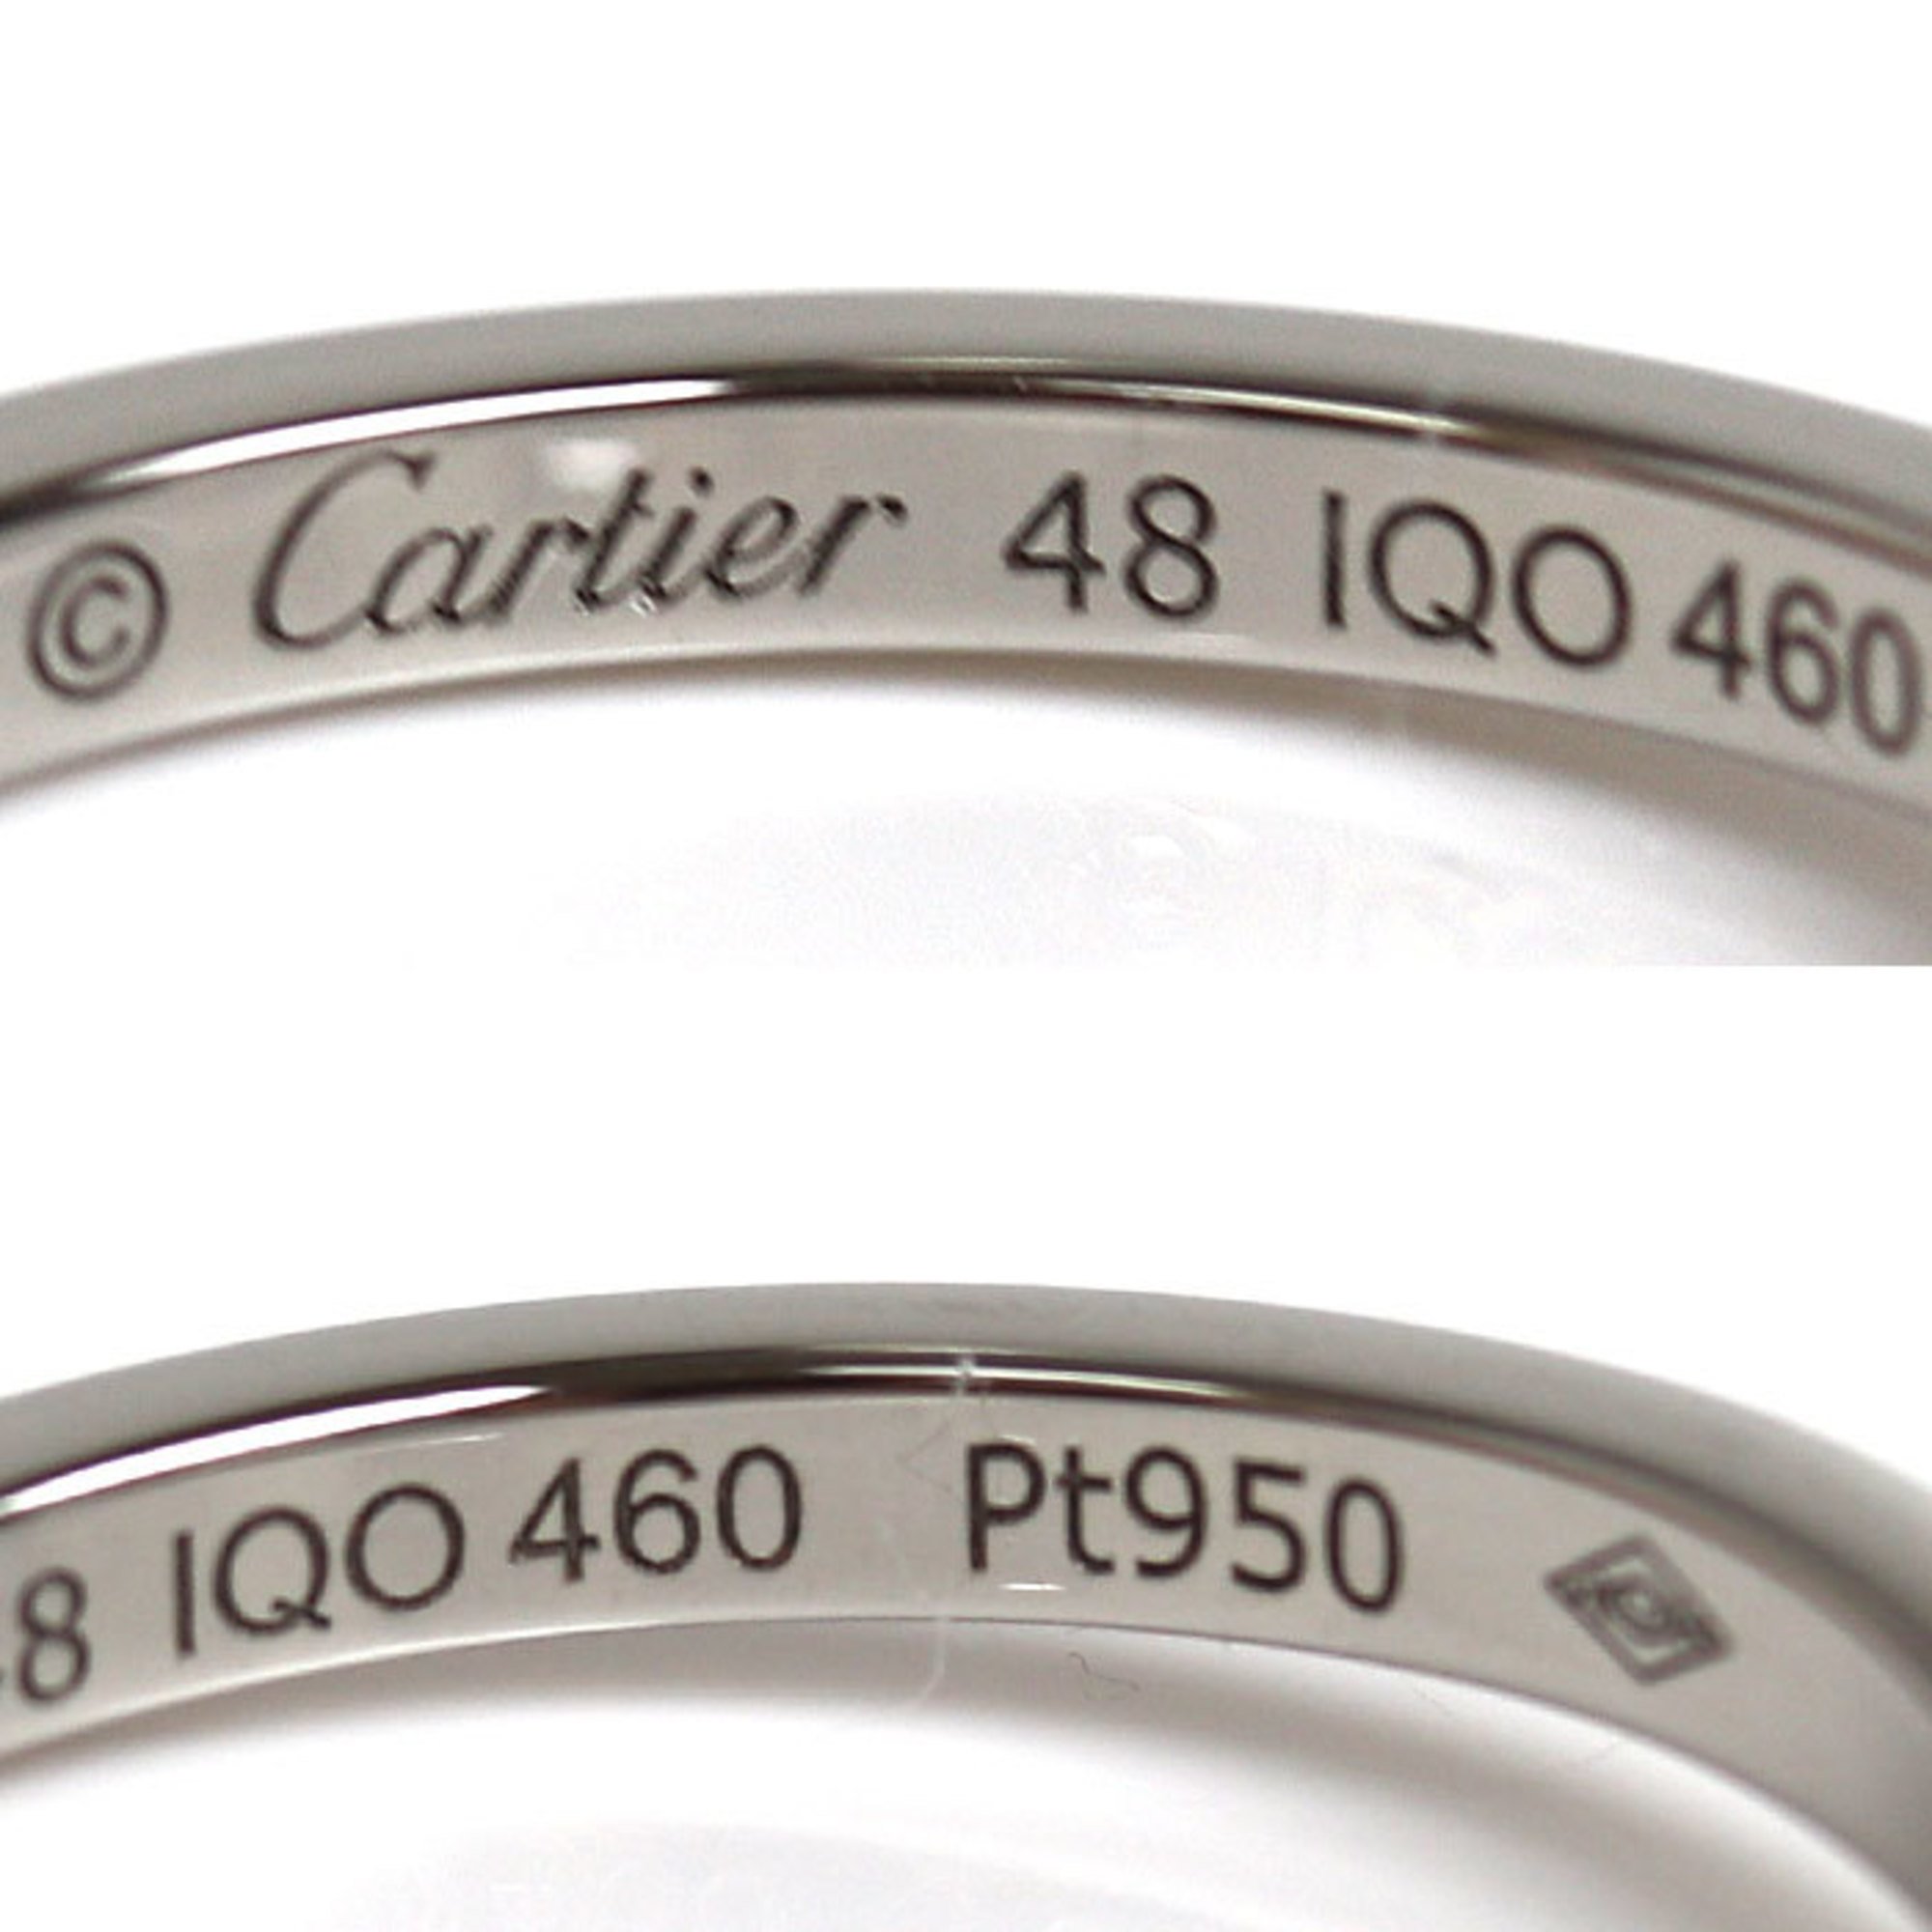 CARTIER Pt950 Platinum Ballerina Curve Wedding Ring B4092848 Size 8 48 3.0g Women's